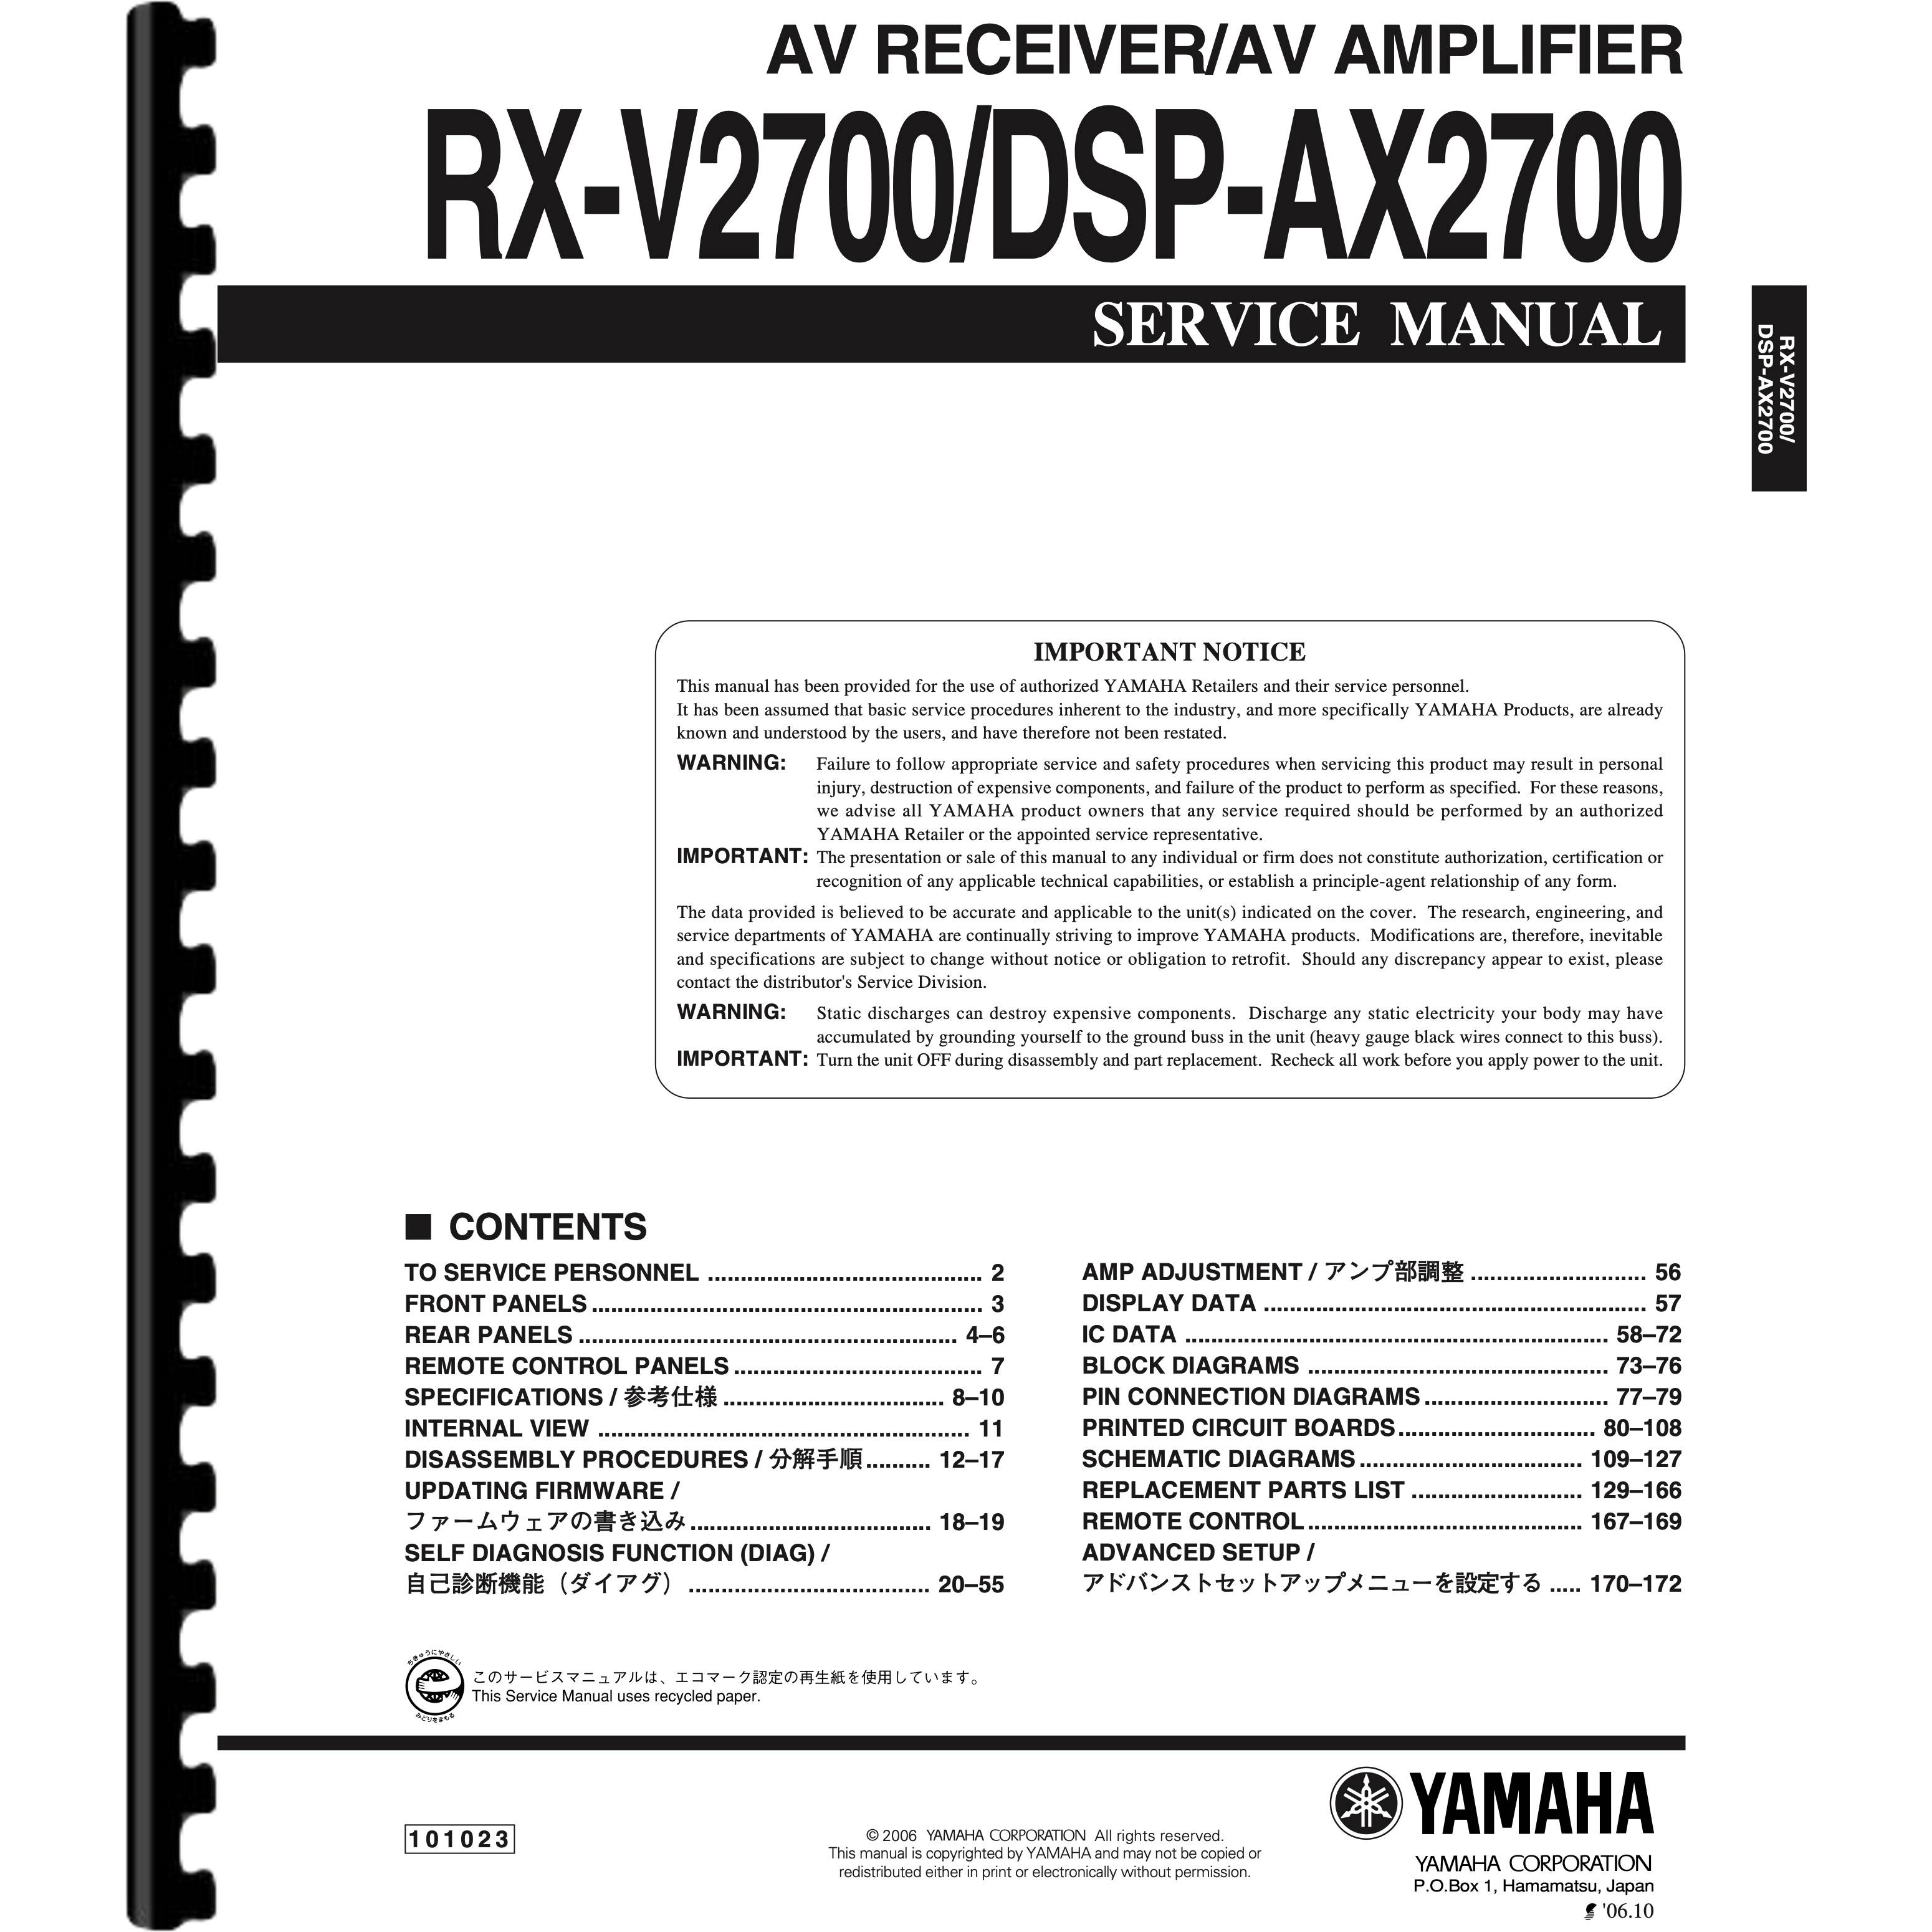 Yamaha DSP-AX2700